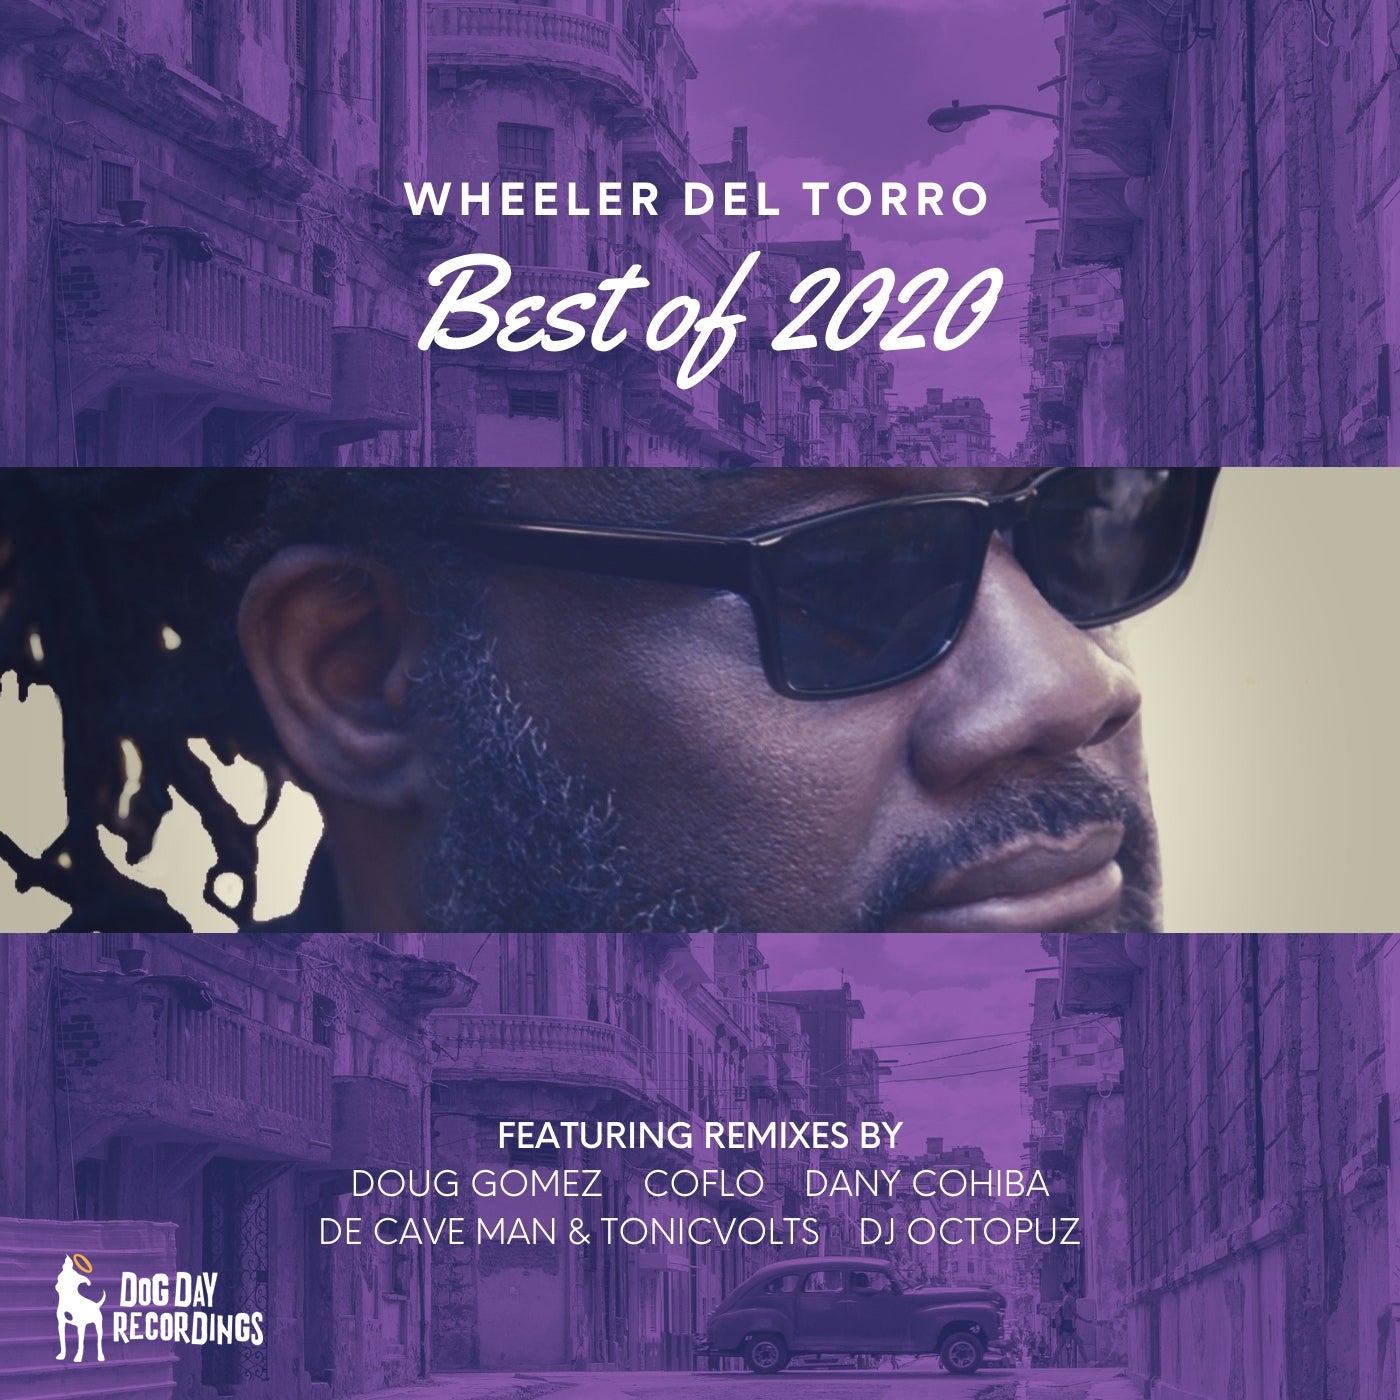 Wheeler del Torro Best of 2020